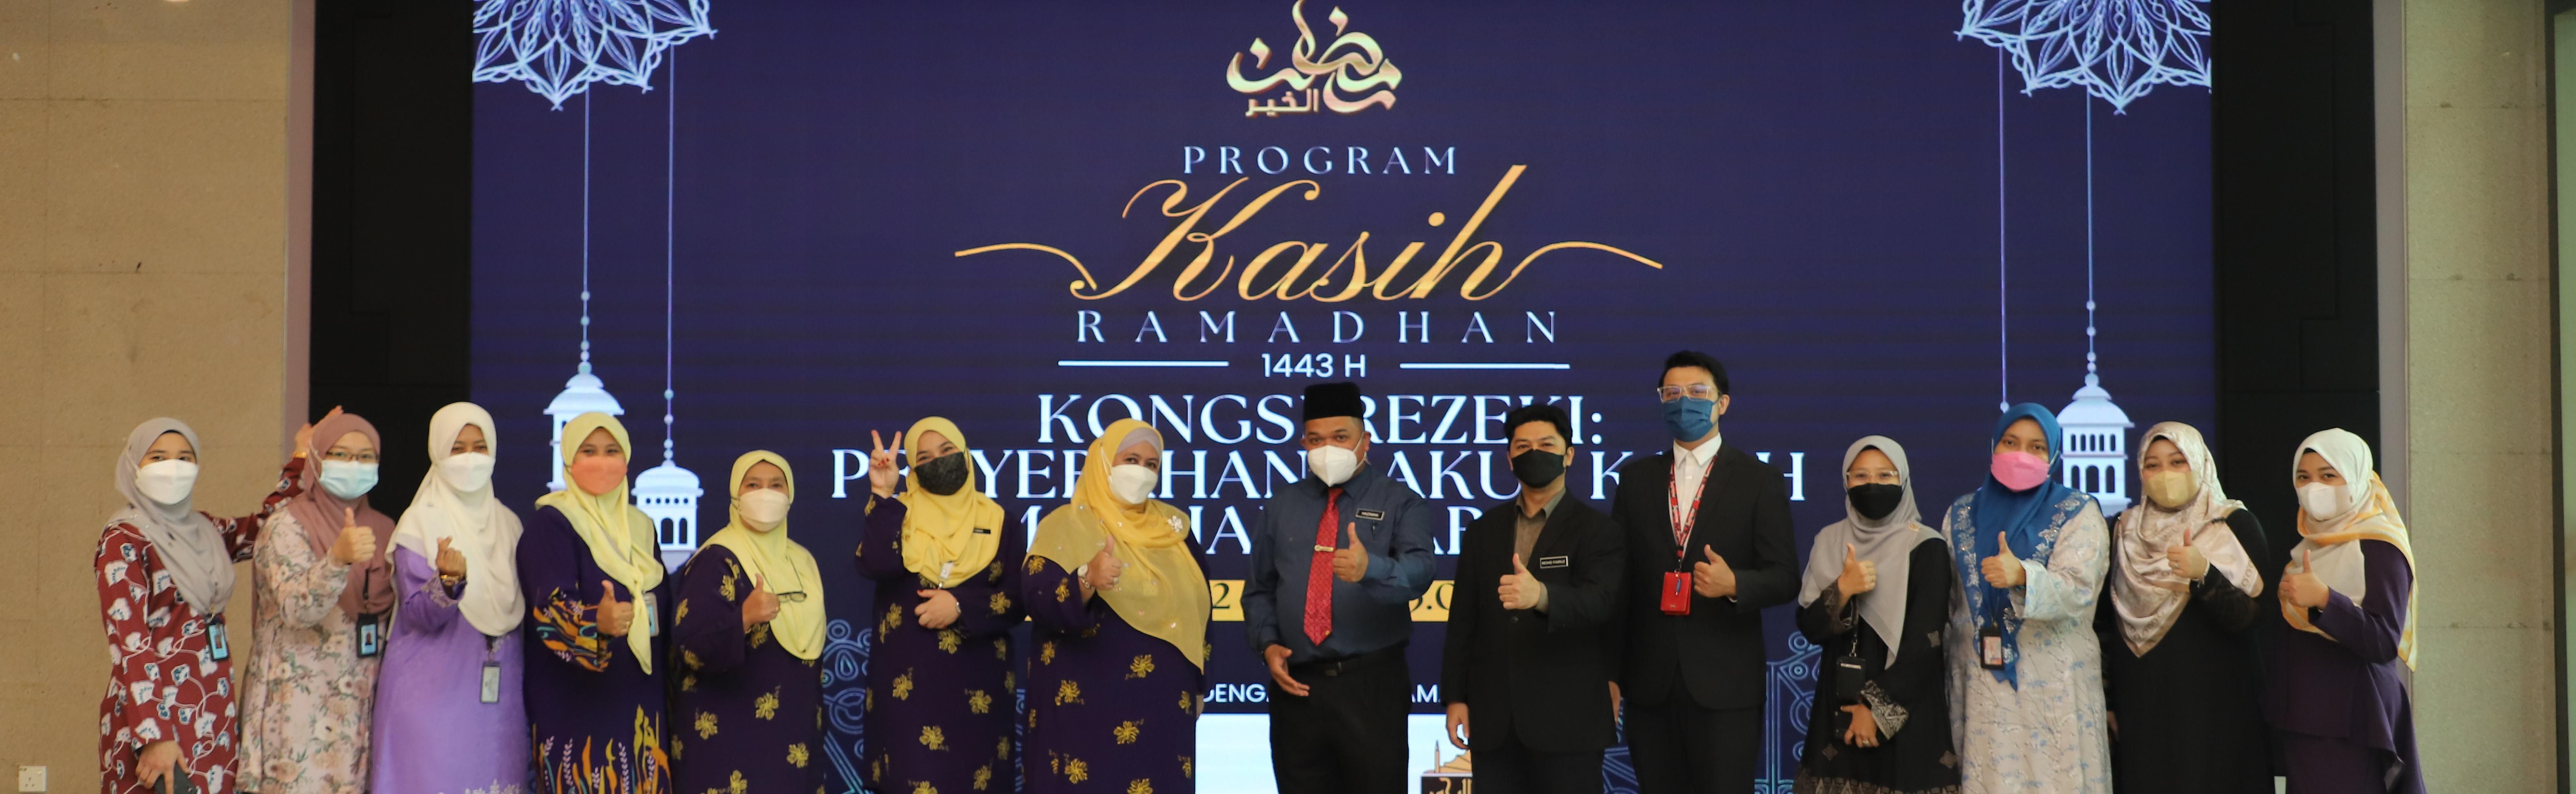 Program Kasih Ramadan KPT 2022 Kongsi Rezeki : Penyerahan Bakul Kasih Ramadan